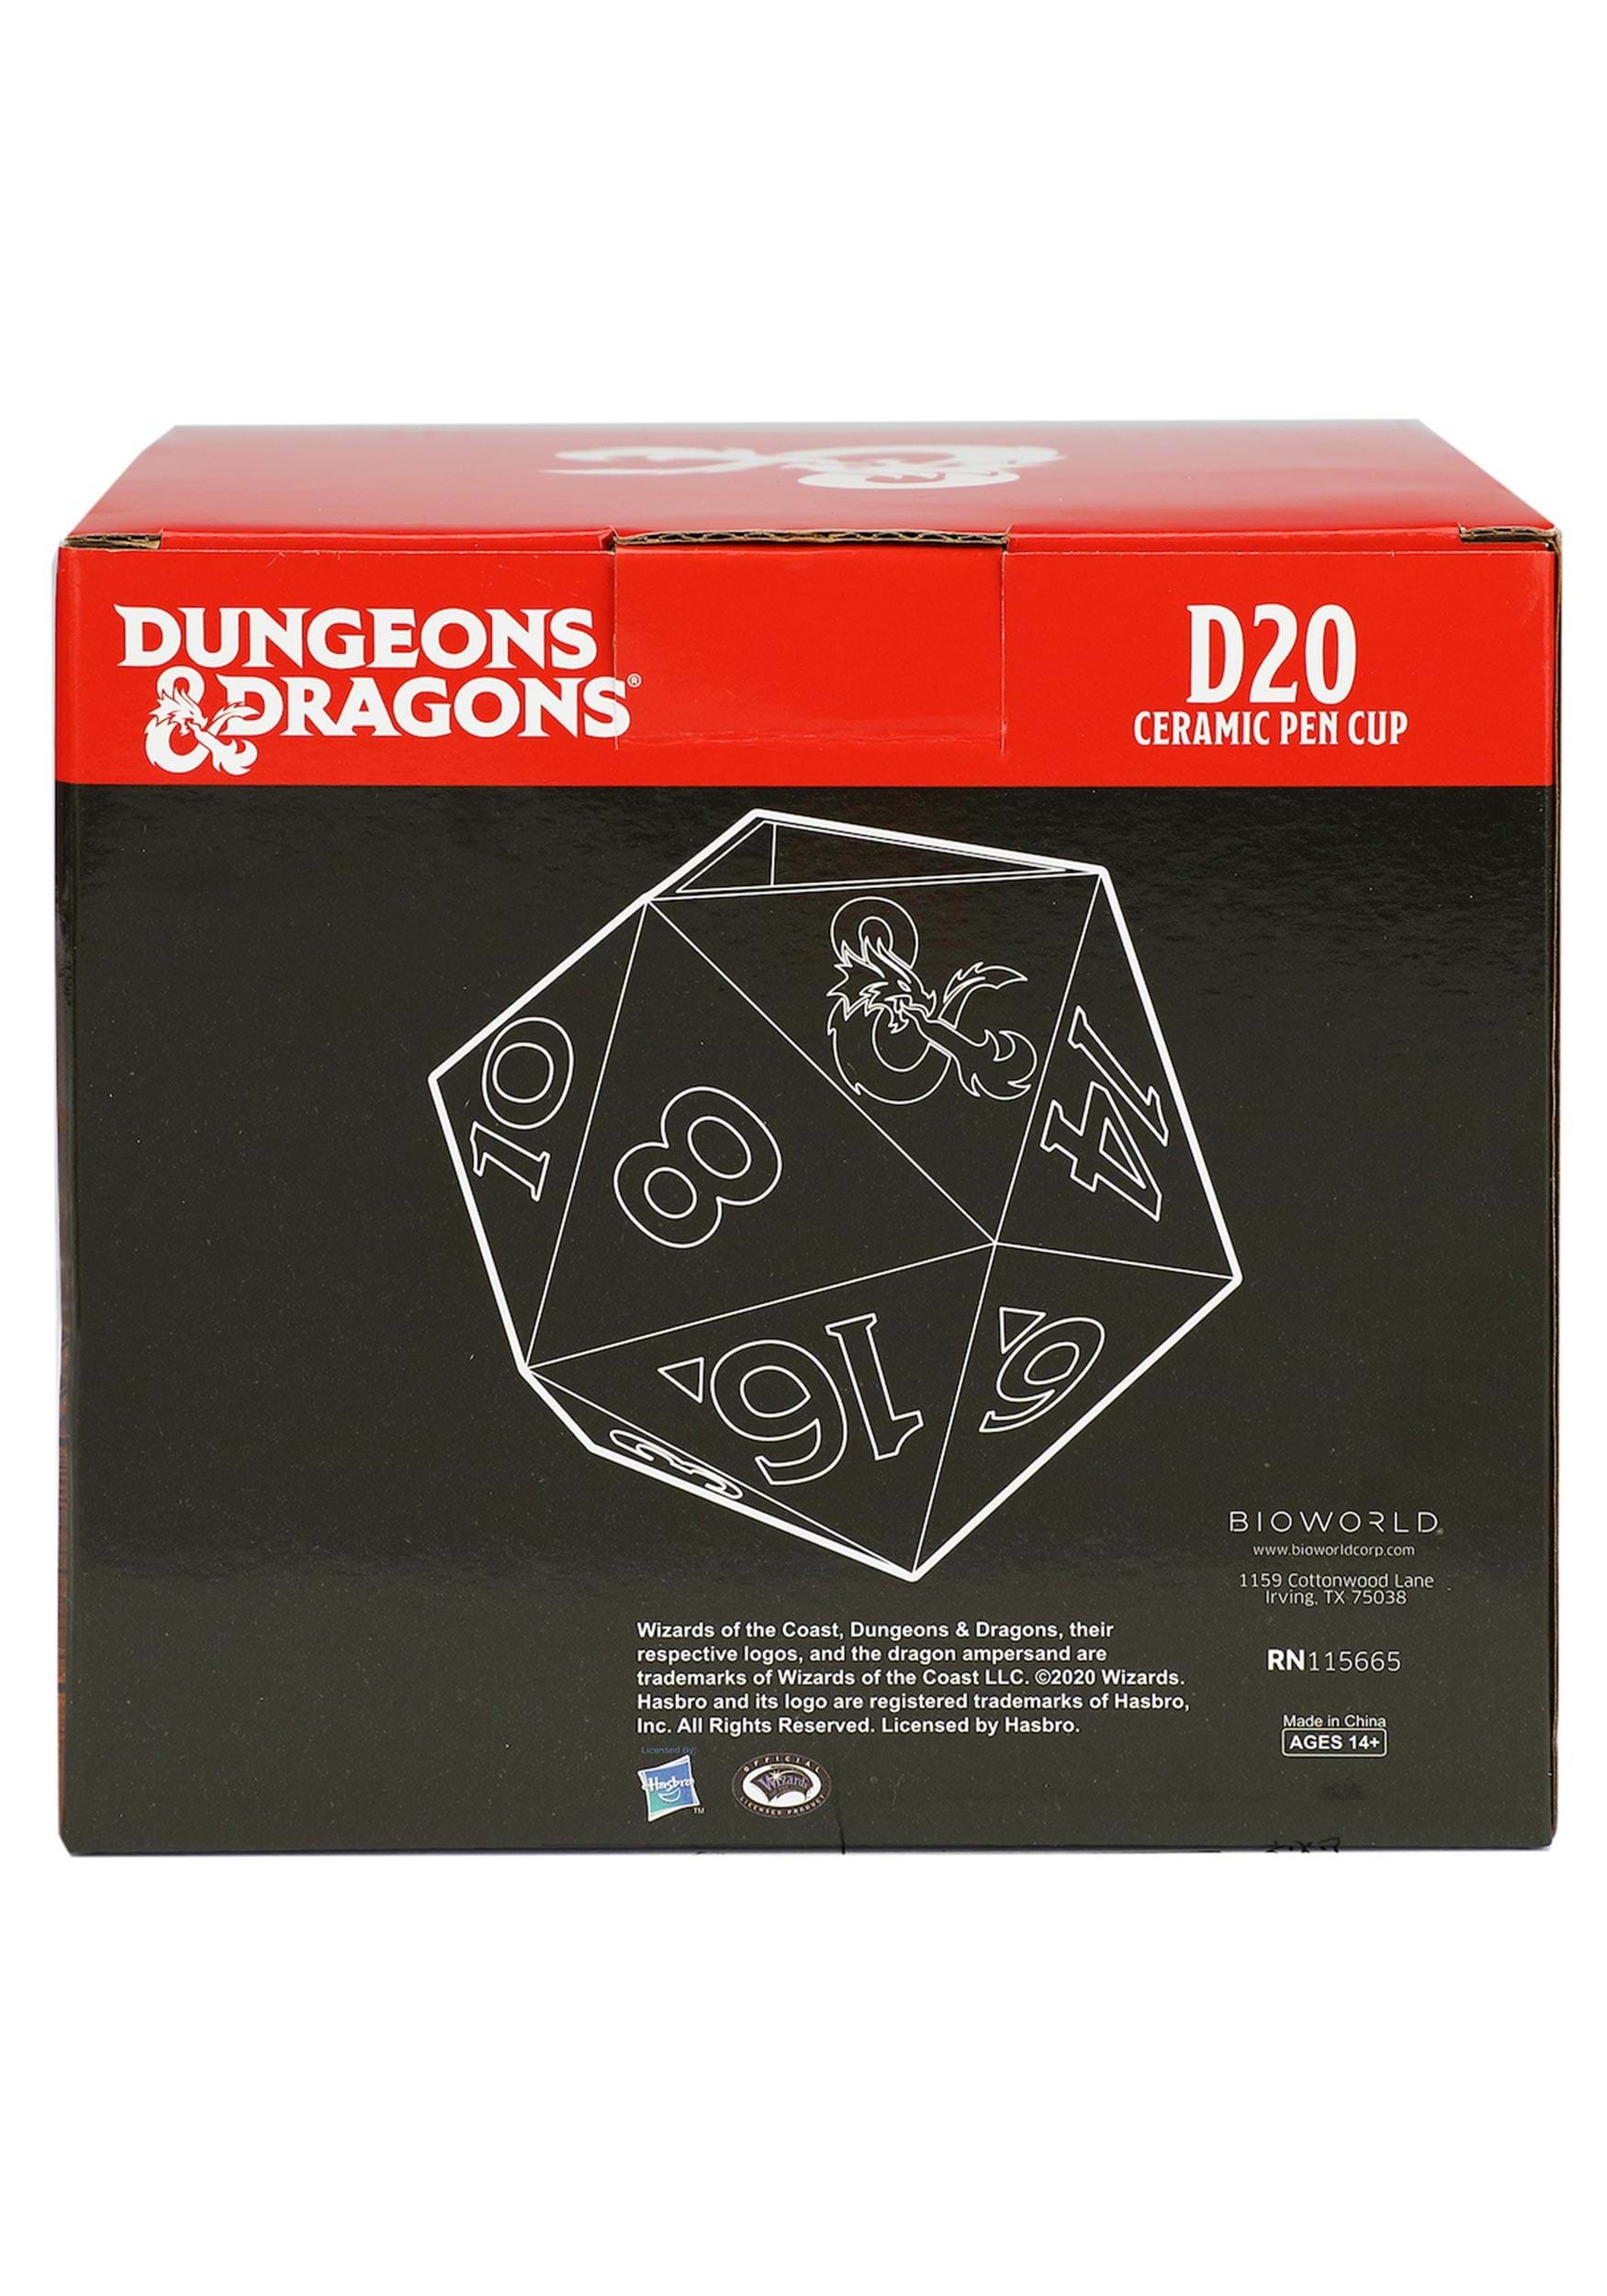 Ceramic Dice Pen Dungeons & Dragons Cup